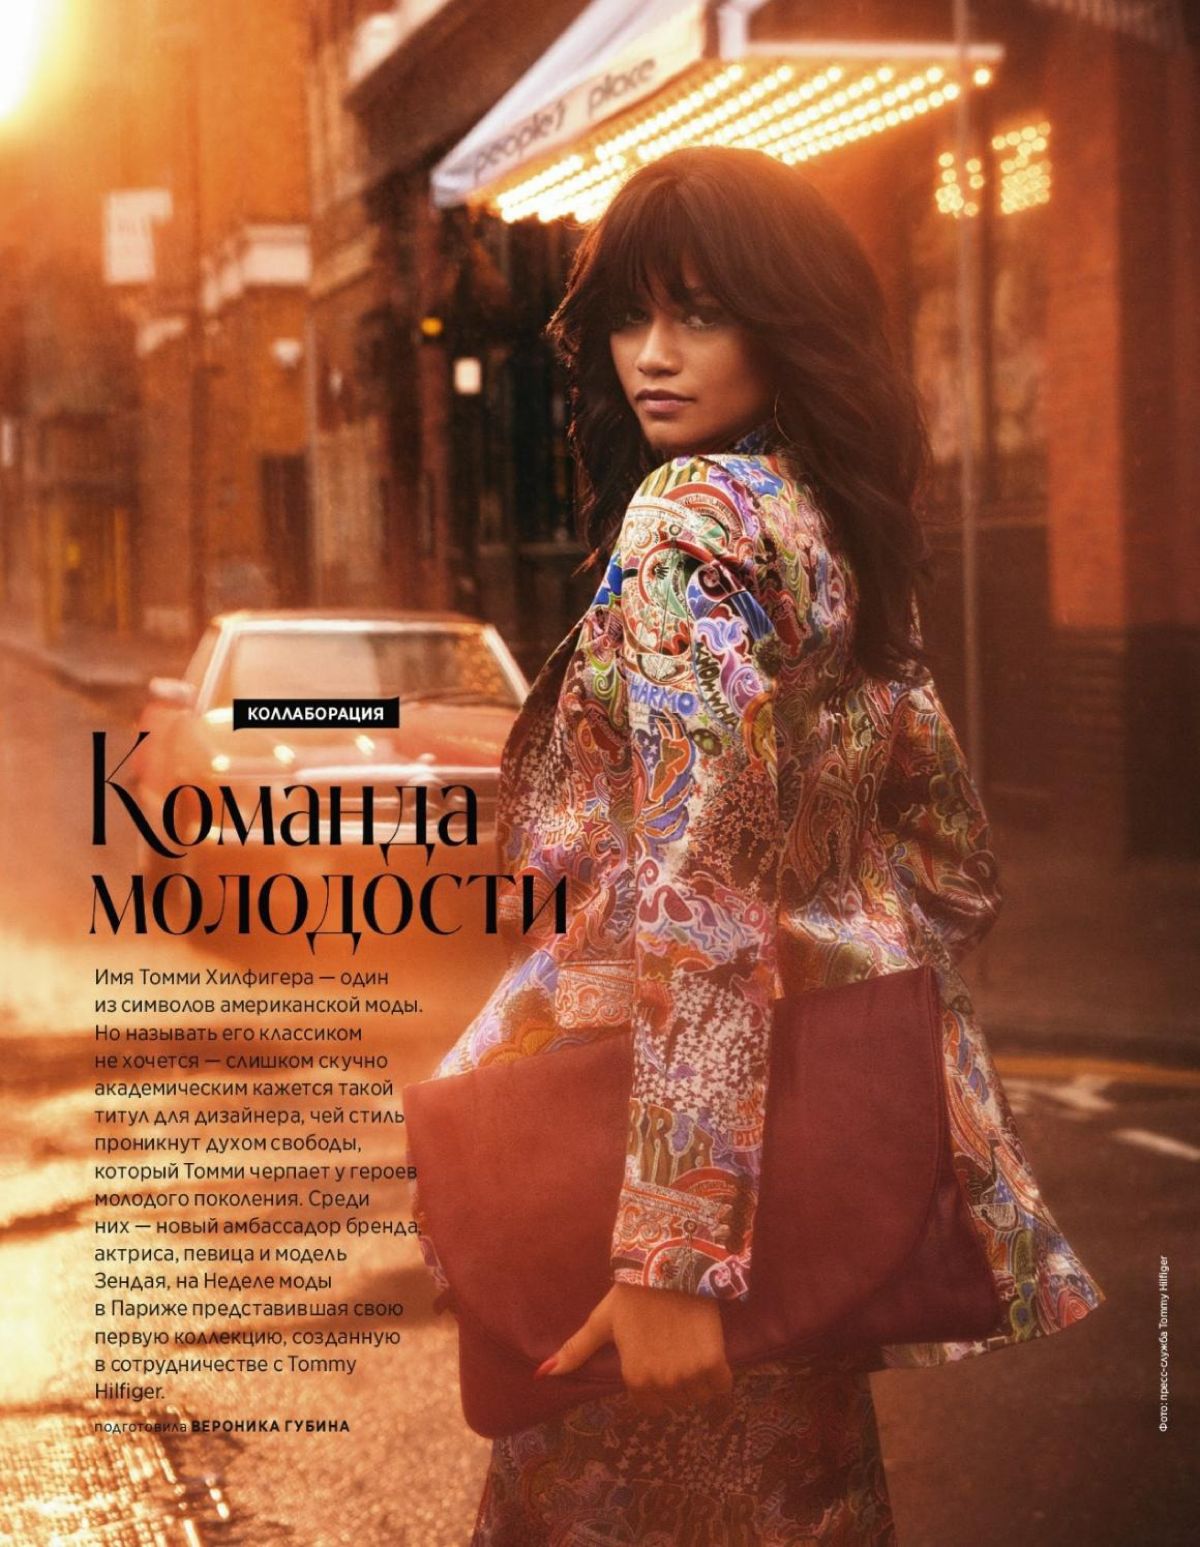 zendaya-coleman-in-instyle-magazine-russia-may-2019-3.jpg